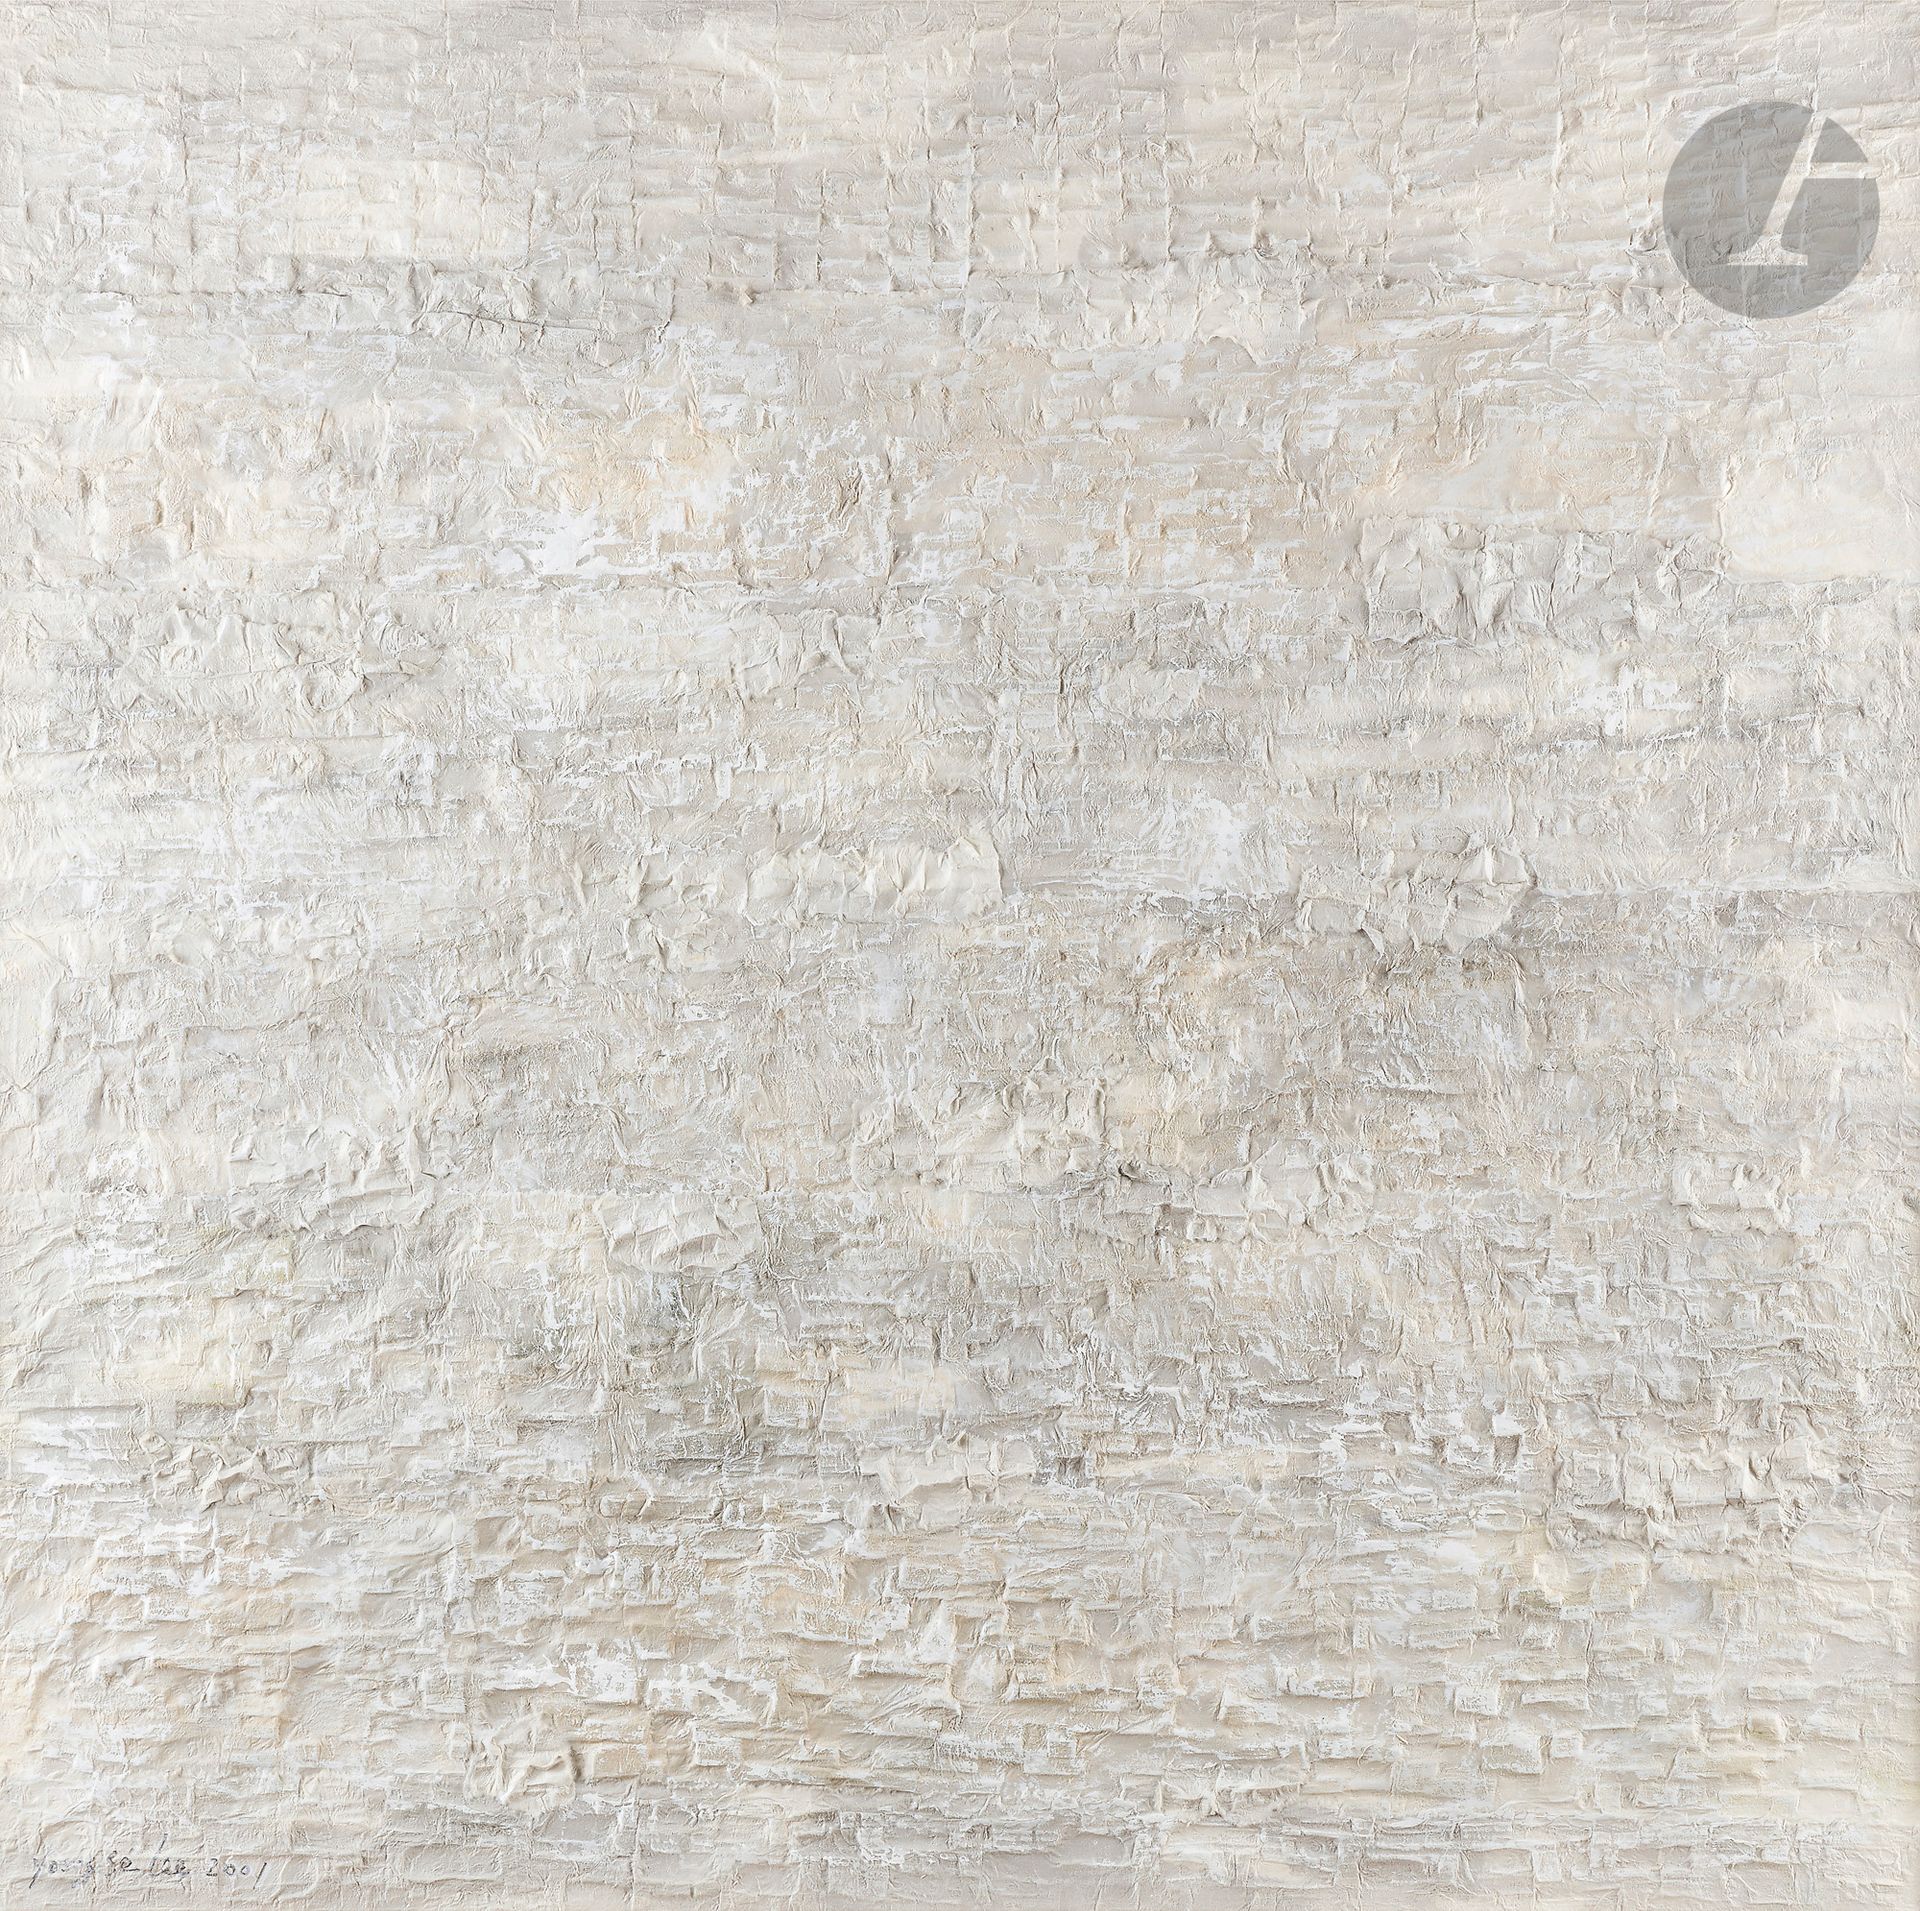 Null 李英世 [韩国] (生于1956年)
空，2001年
镶嵌在画布上的压花纸混合媒体。
左下方有签名和日期。
100 x 100厘米